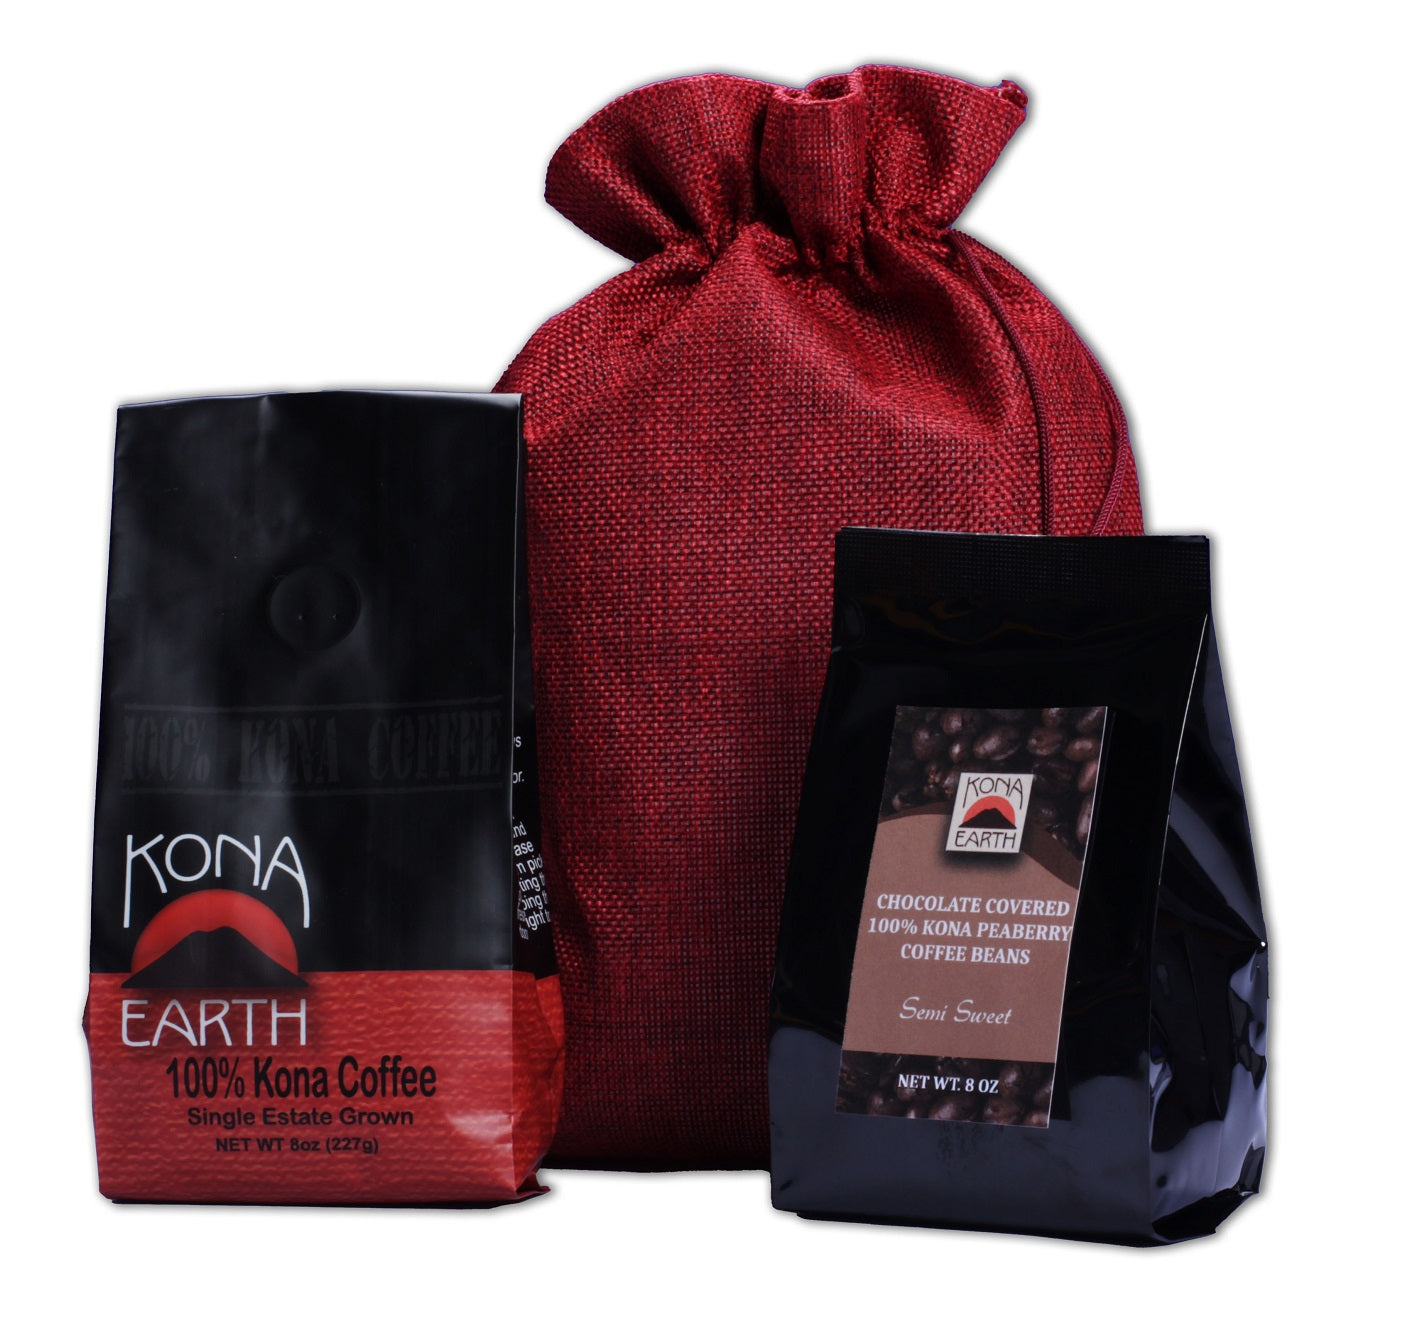 Kona Earth Kona coffee and Hawaiian chocolate gift bundle with red bag